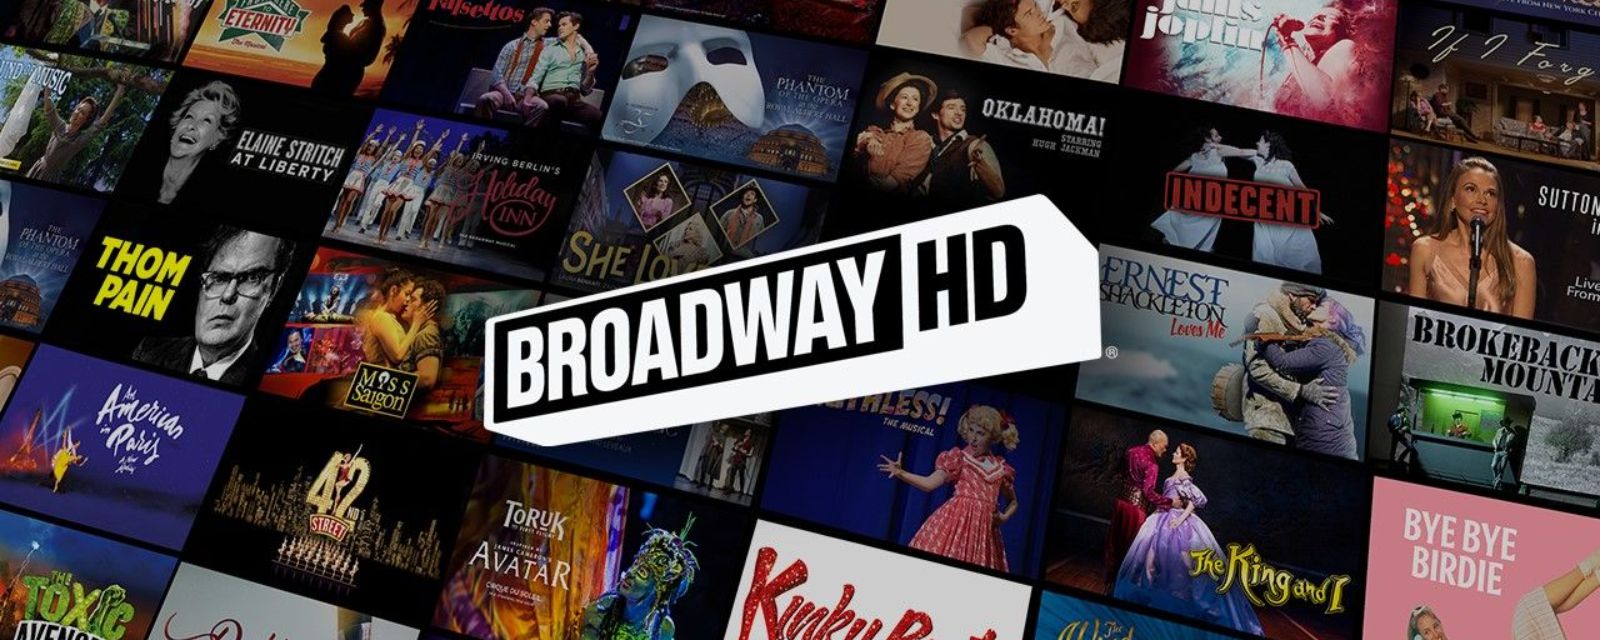 BroadwayHD. Broadway in Hollywood